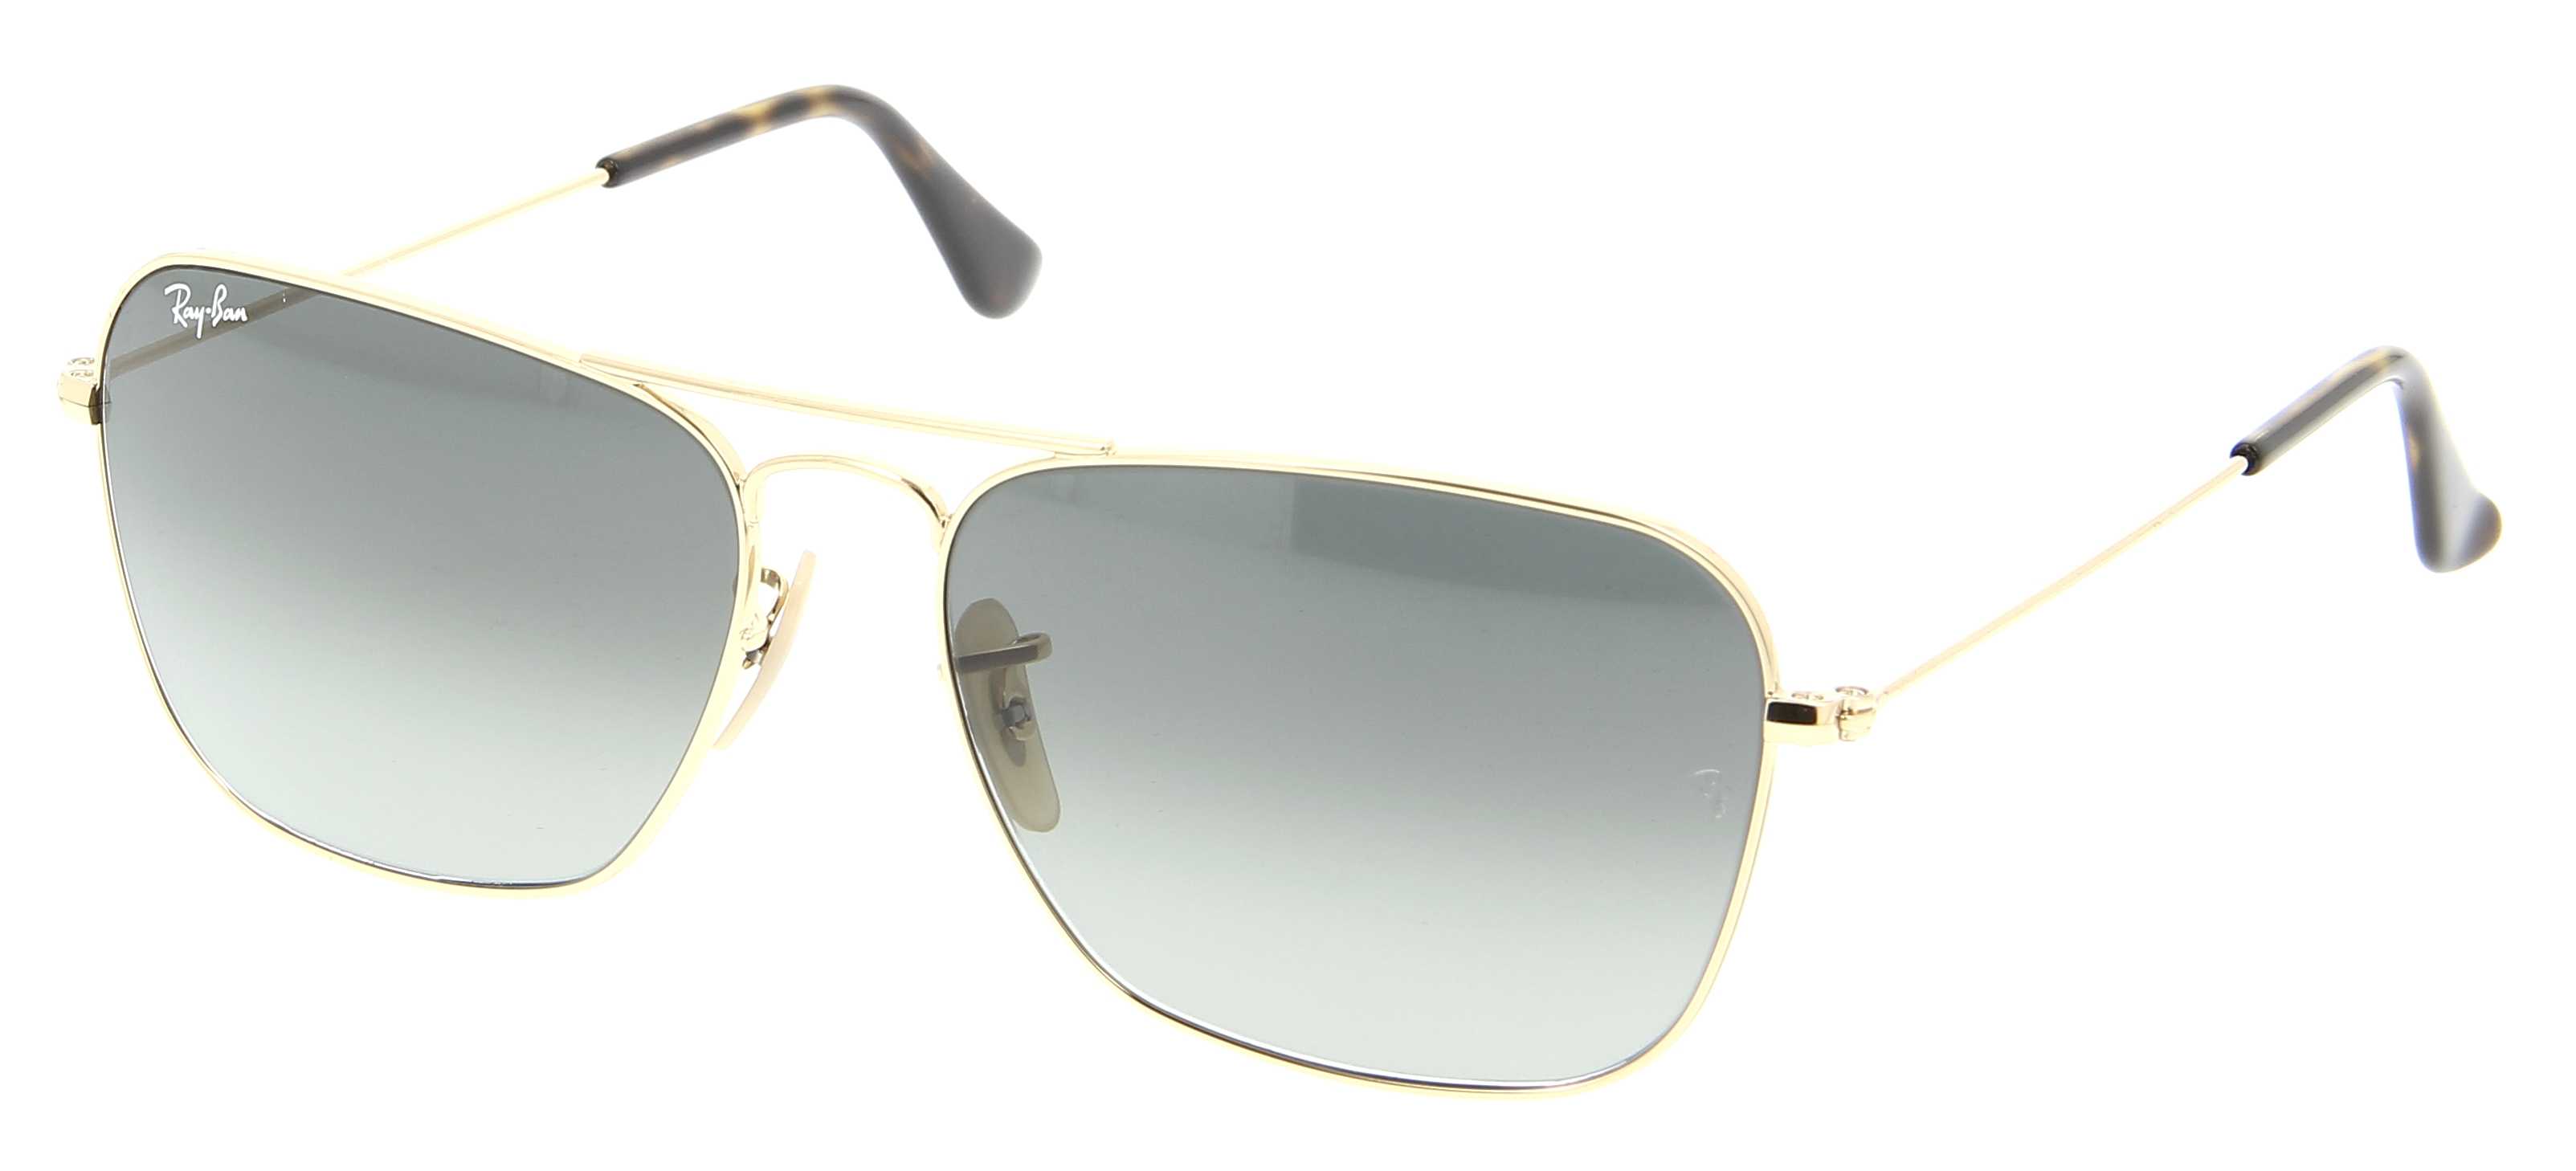 Sunglasses RAY-BAN RB 3136 181/71 Caravan 55/15 Unisex doré square frames  Full Frame Glasses Classic 55mmx15mm 133$CA